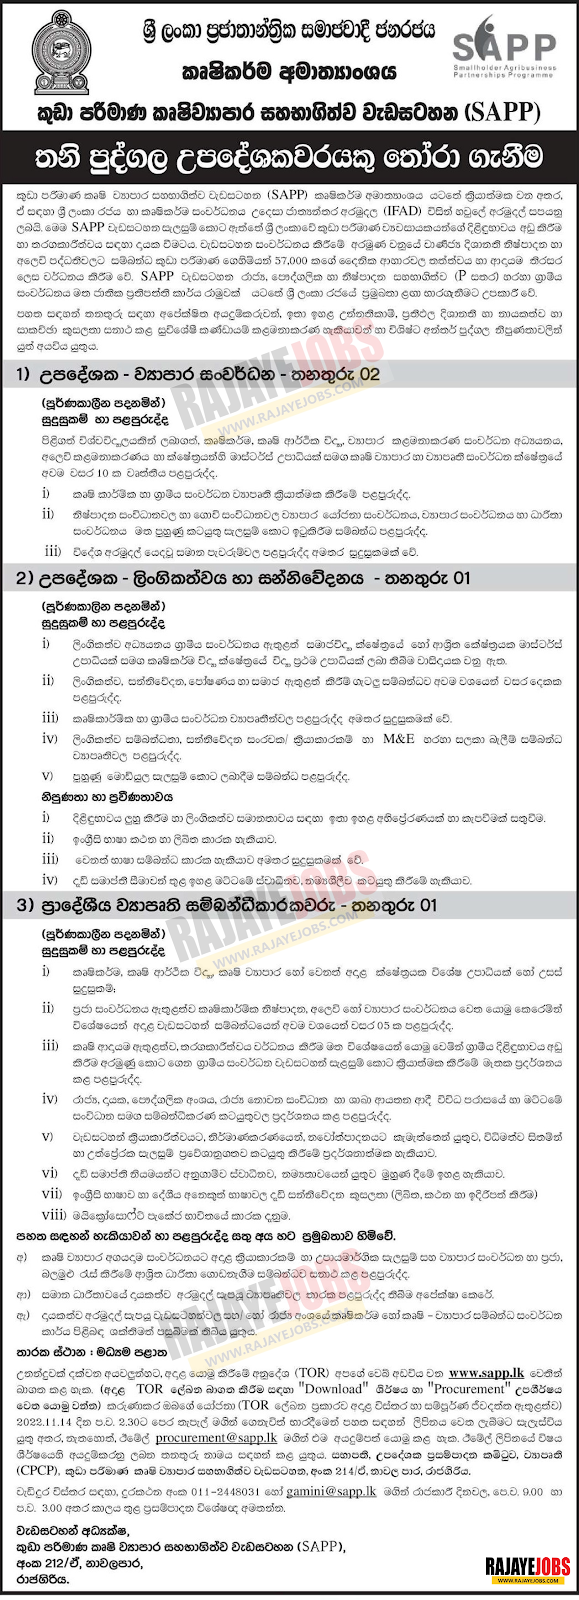 Ministry of Agriculture Job Vacancies